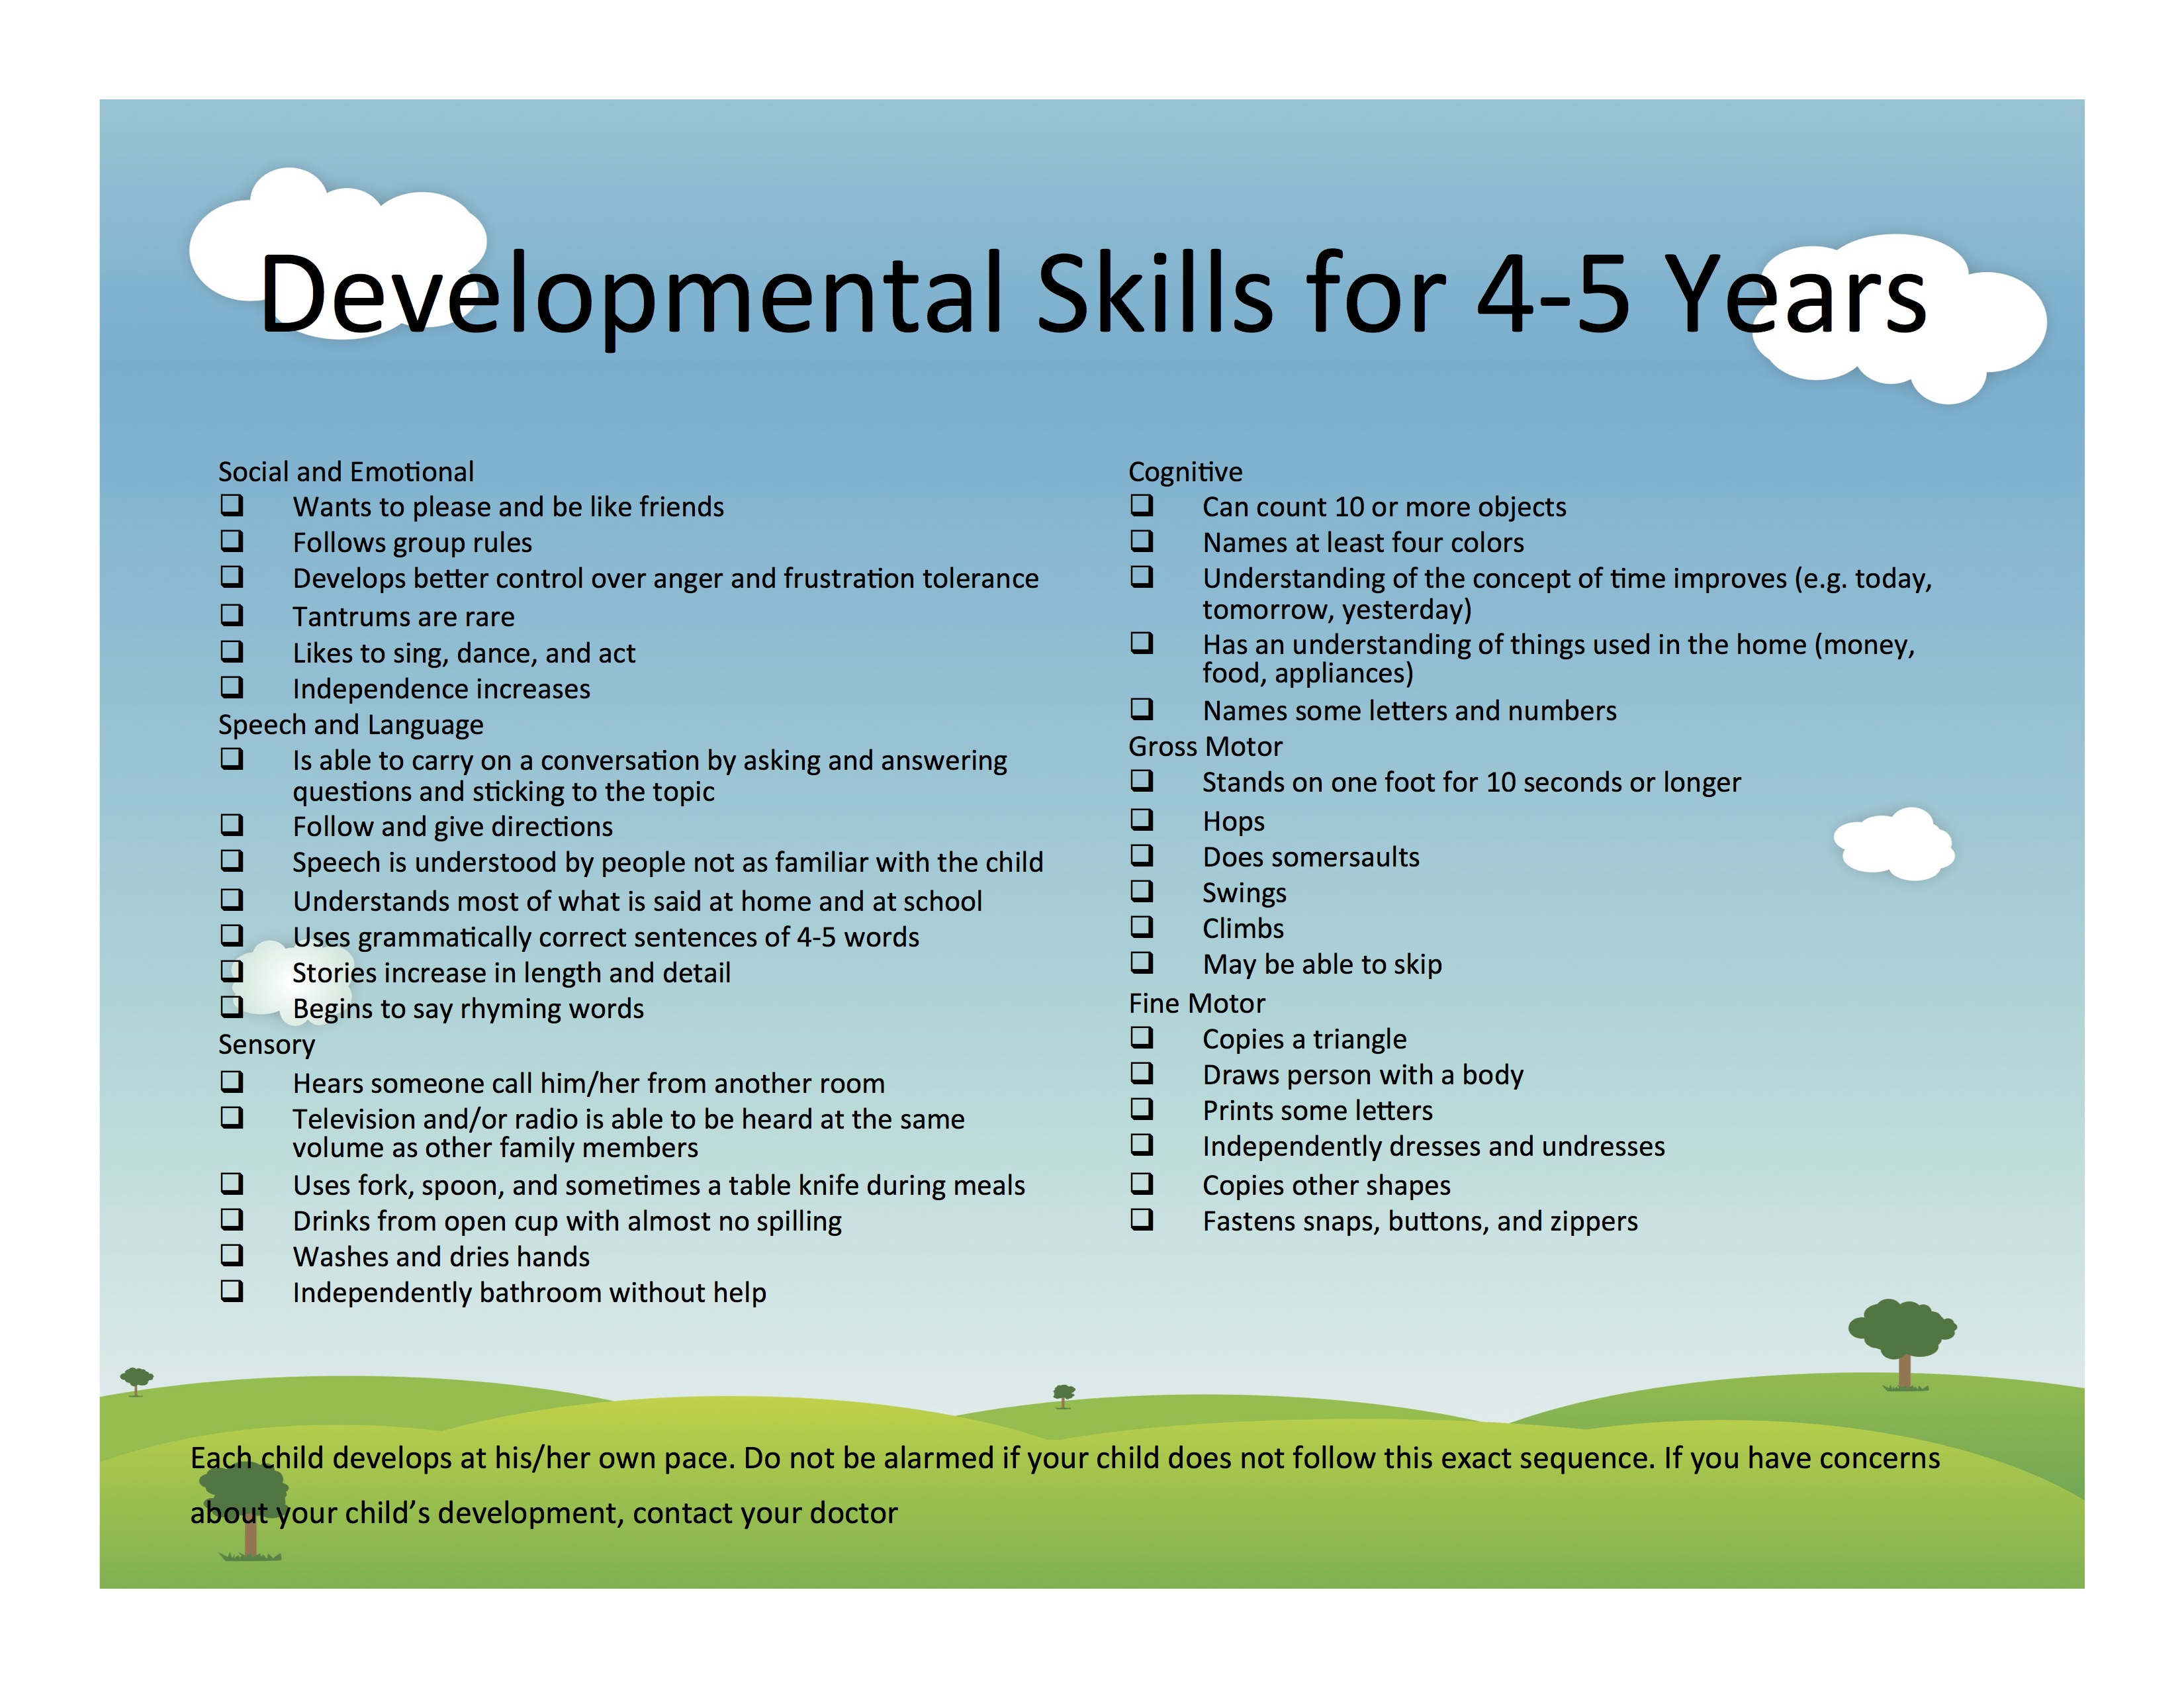 problem solving skills developmental milestones